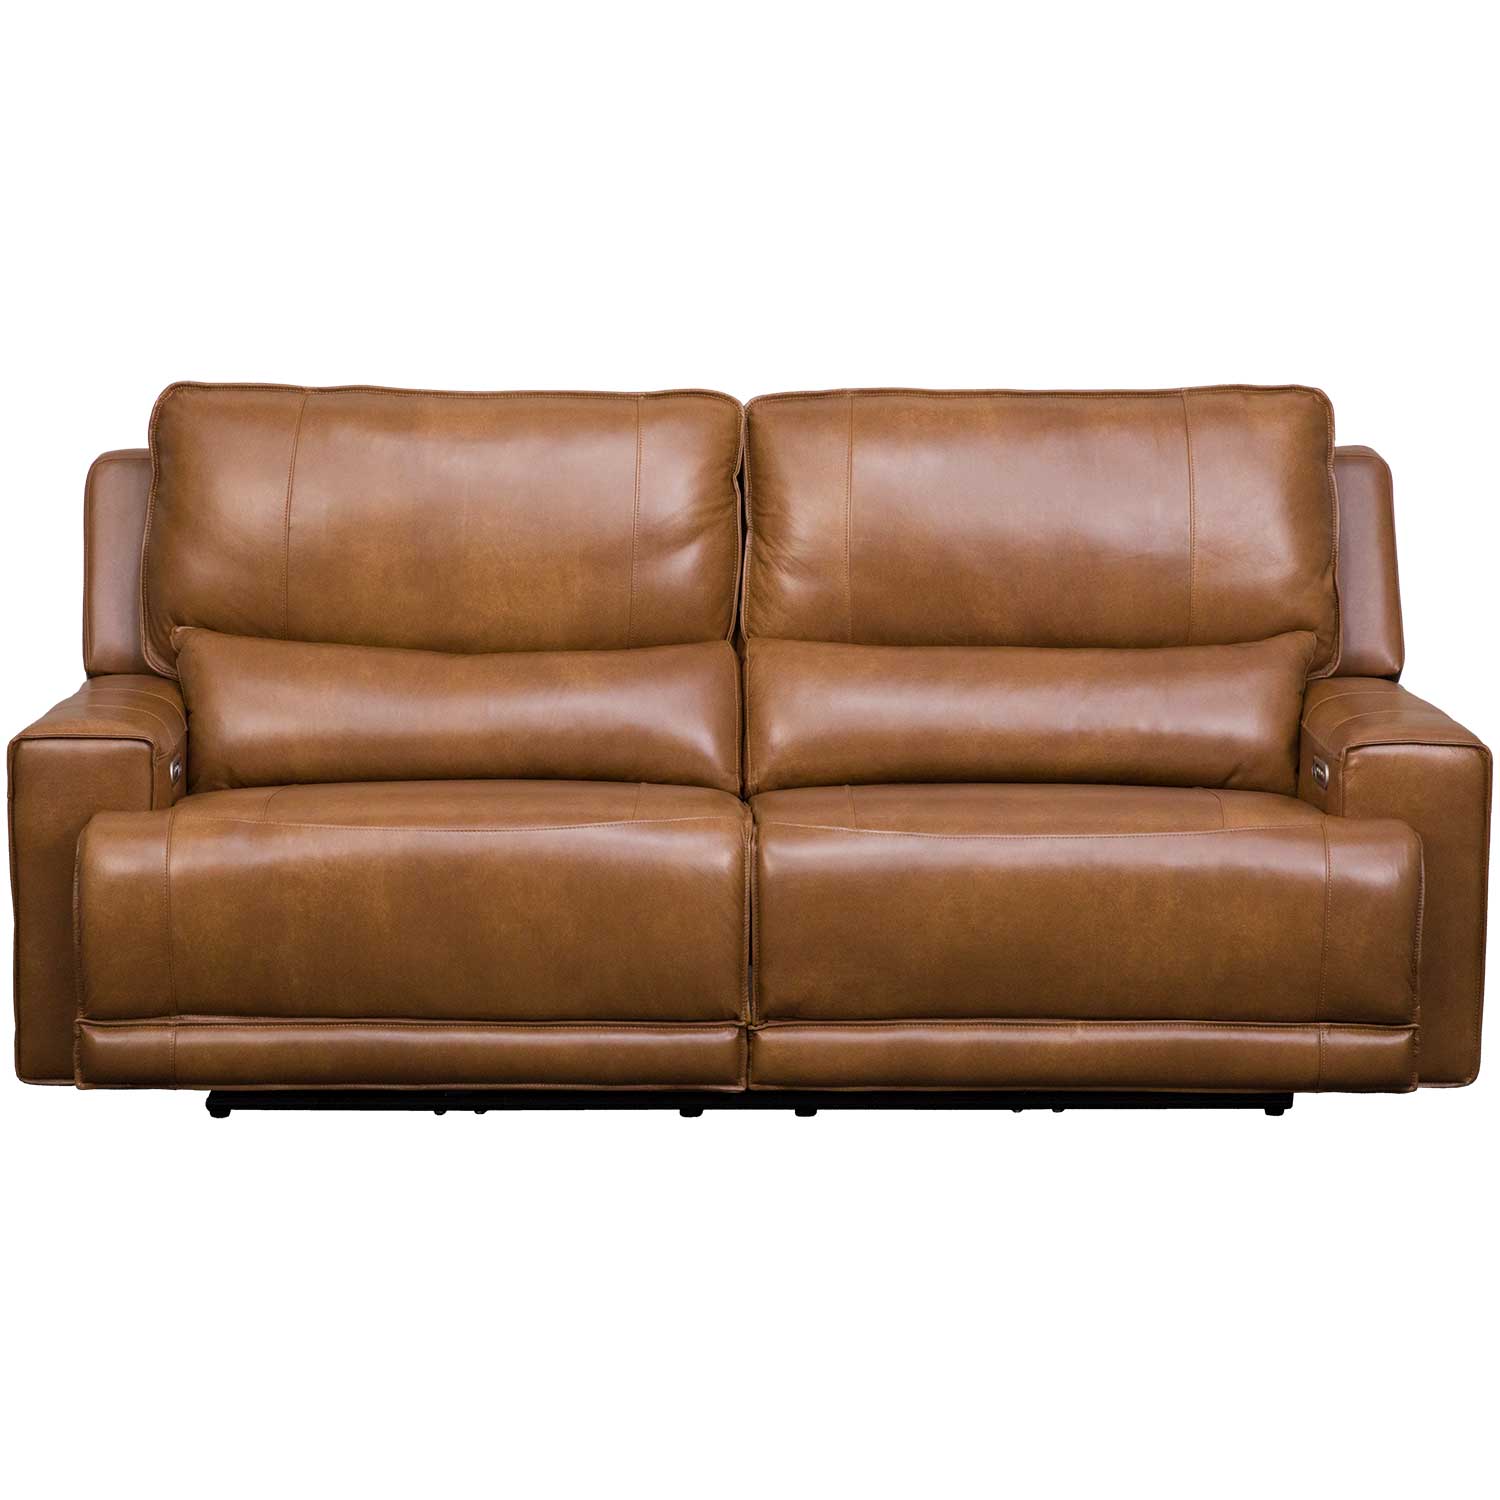 Rhen Leather P2 Reclining Sofa 1d